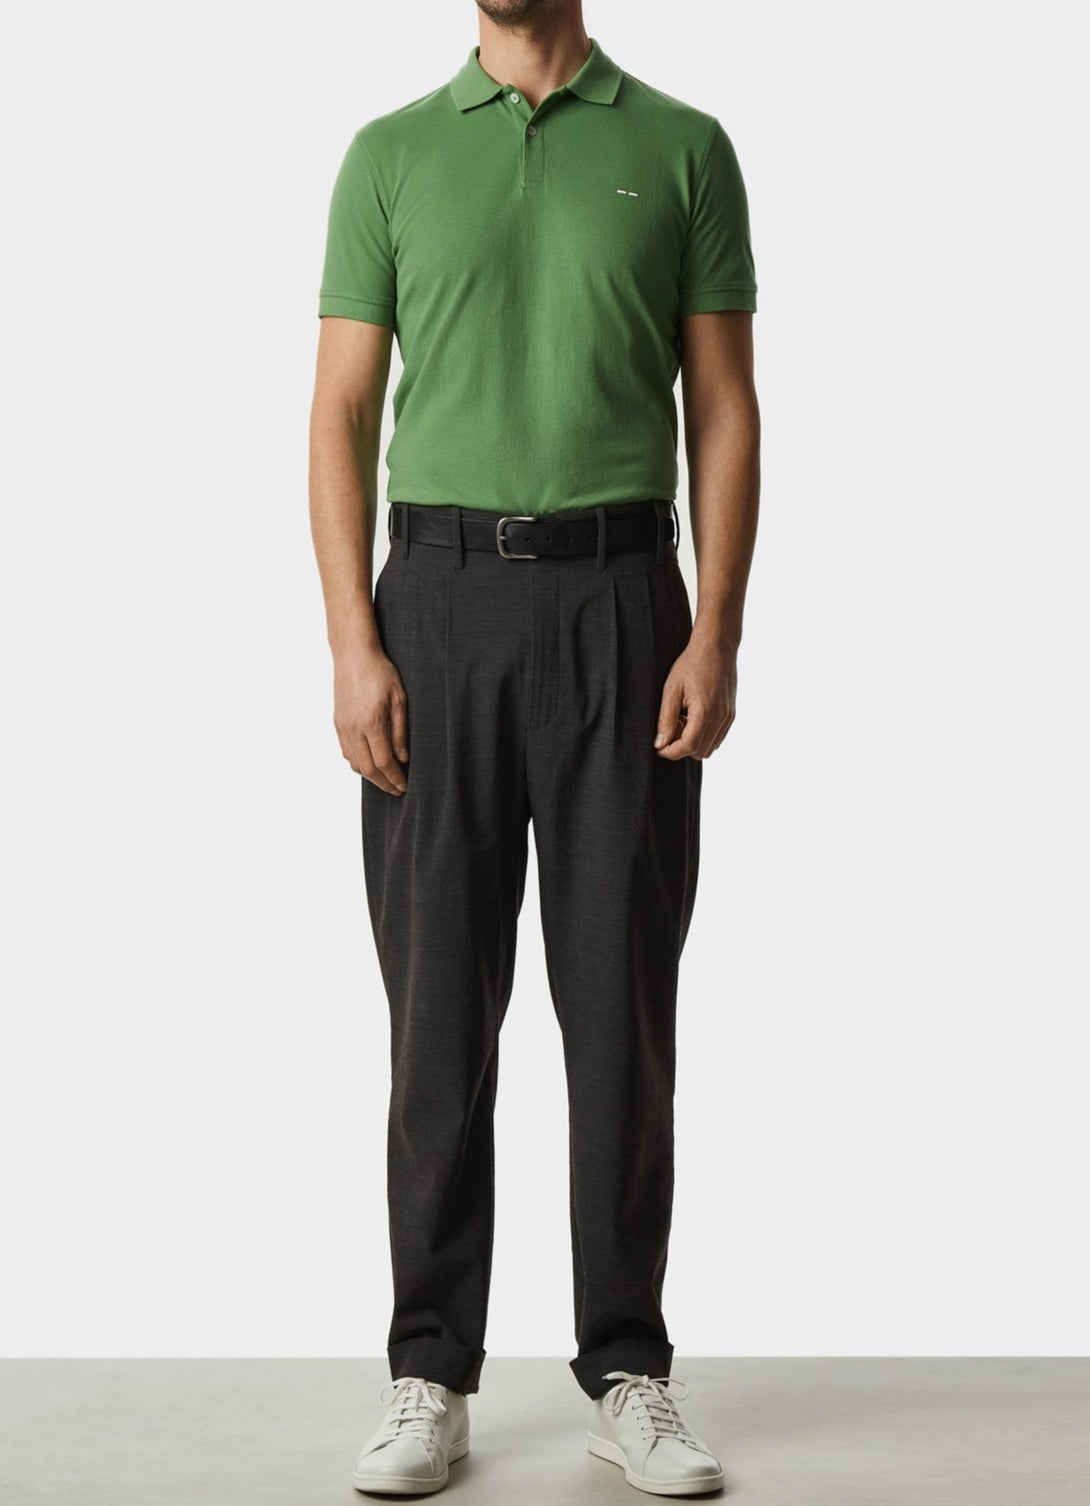 Men Polo | Green Cotton Pique Washed Polo Shirt by Spanish designer Adolfo Dominguez